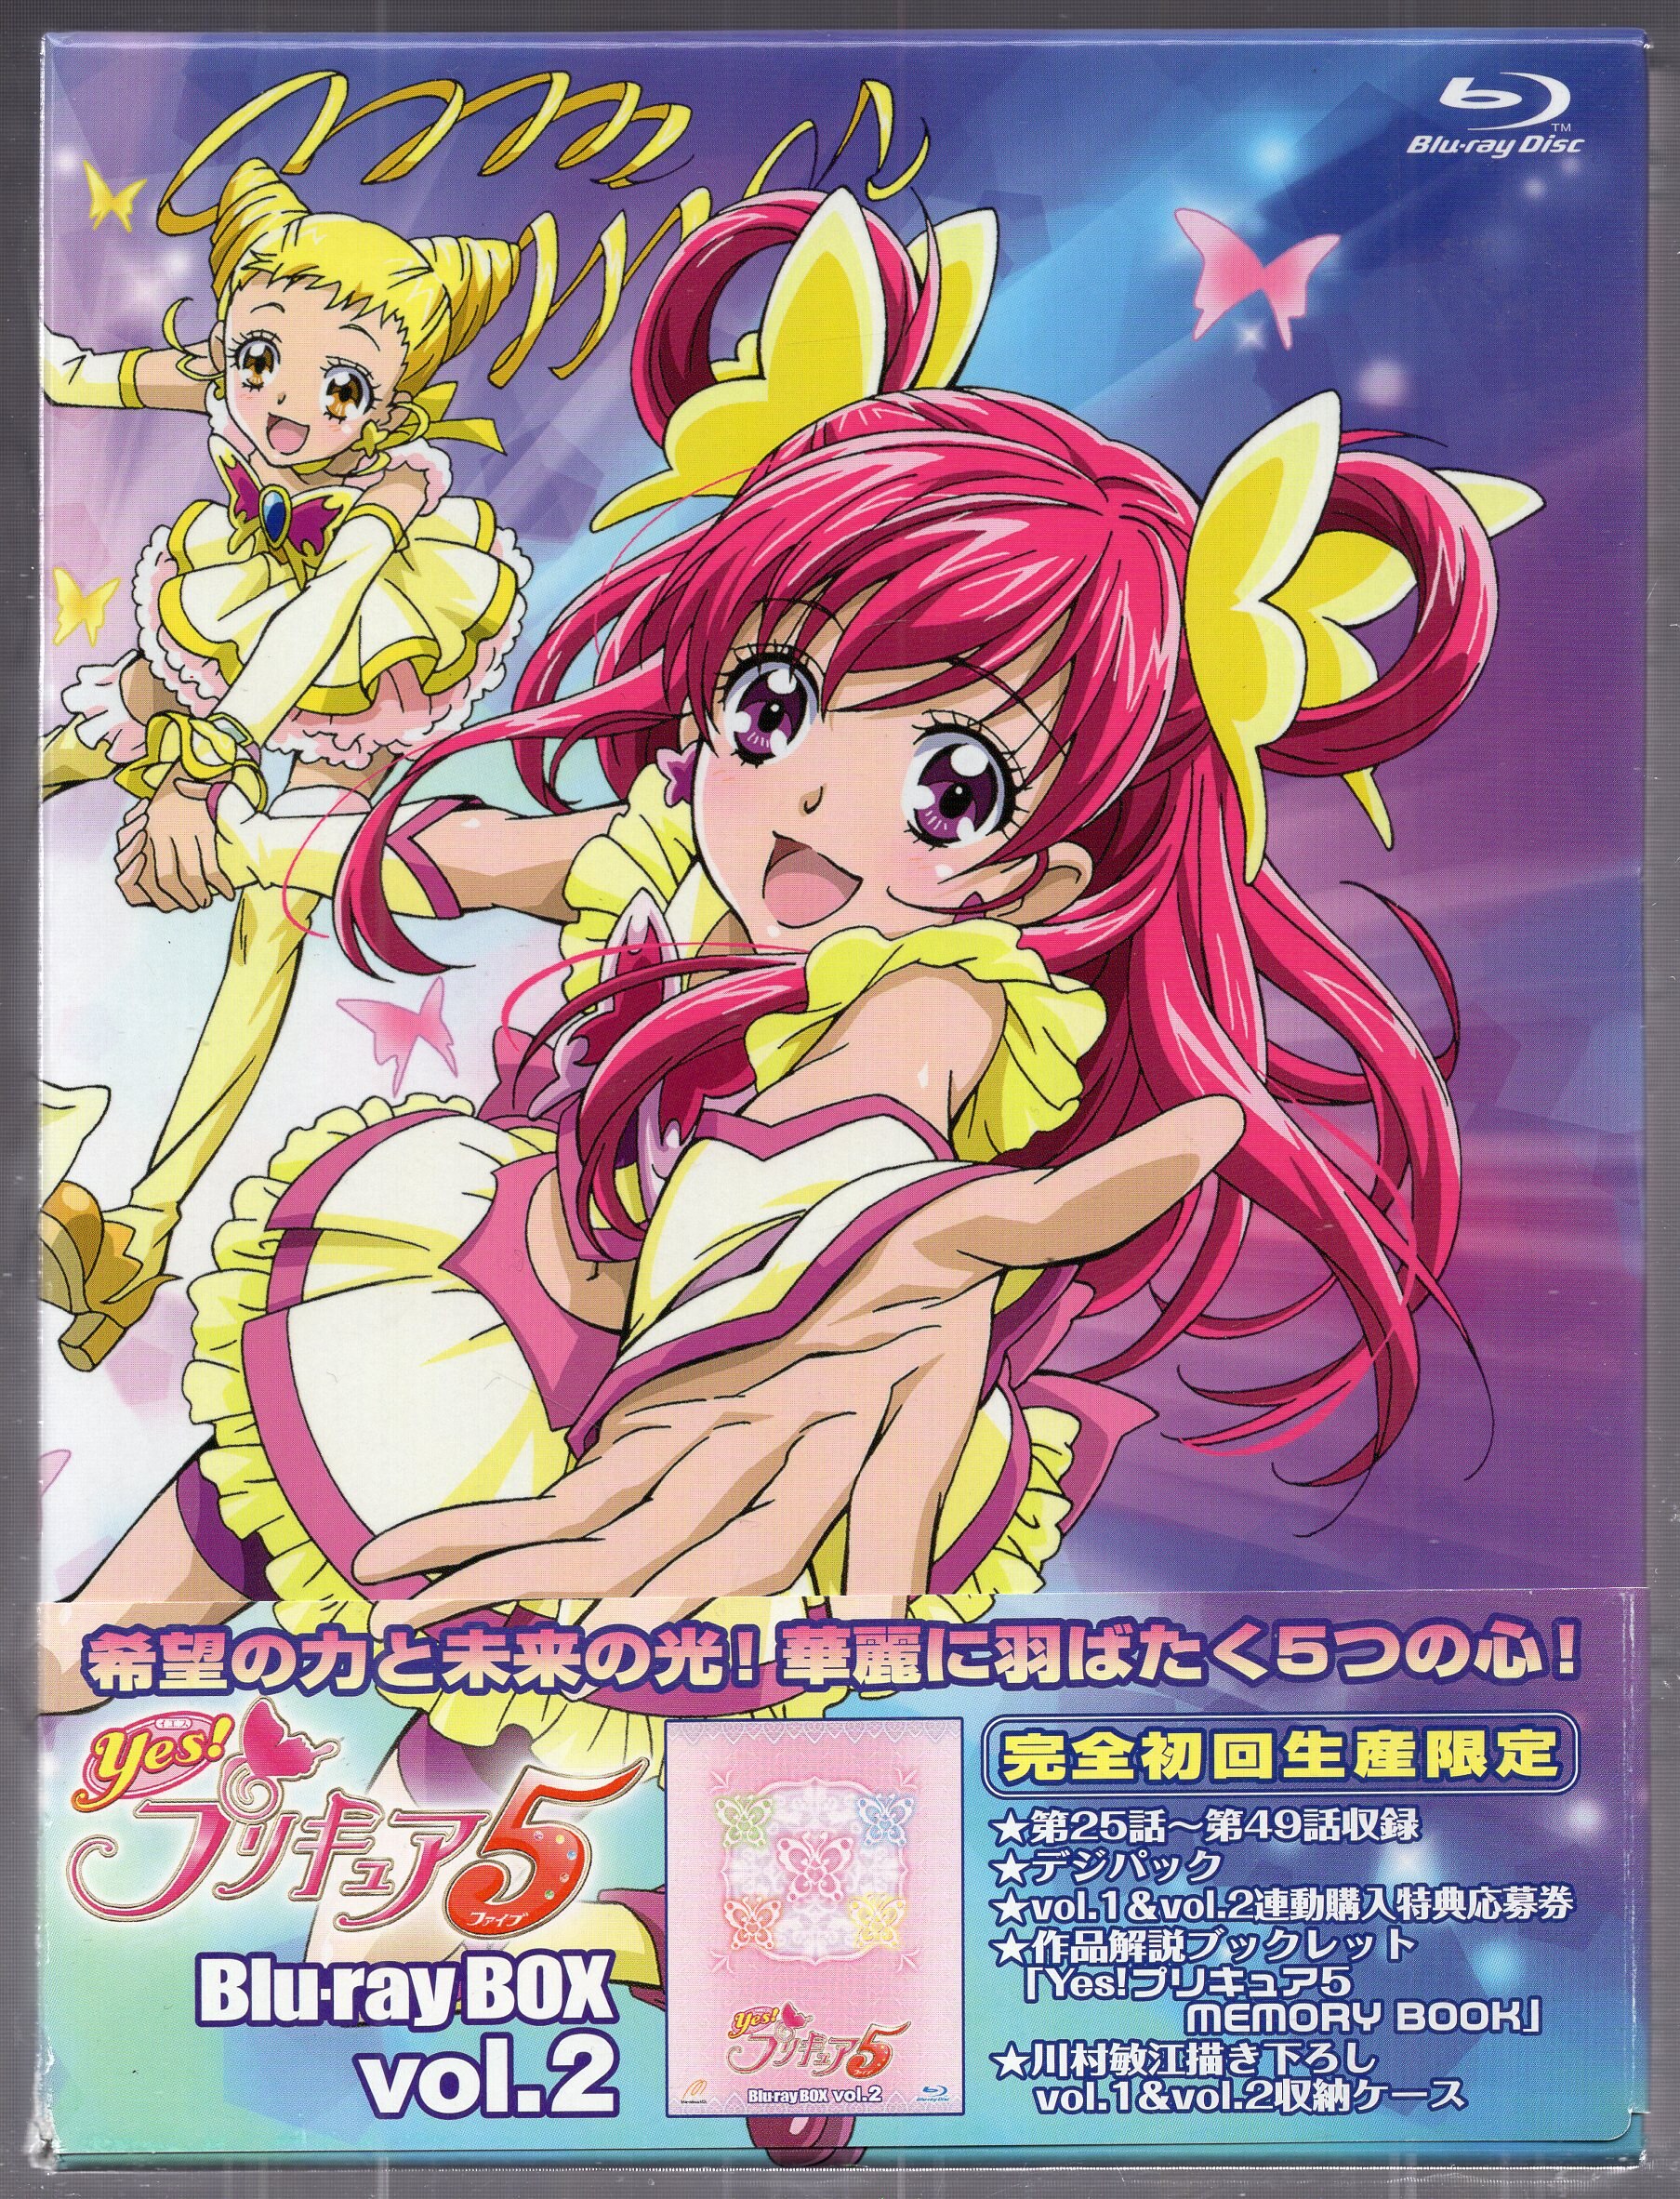 Yesプリキュア5 Blu-rayBOX Vol.2 (完全初回生産限定) - DVD